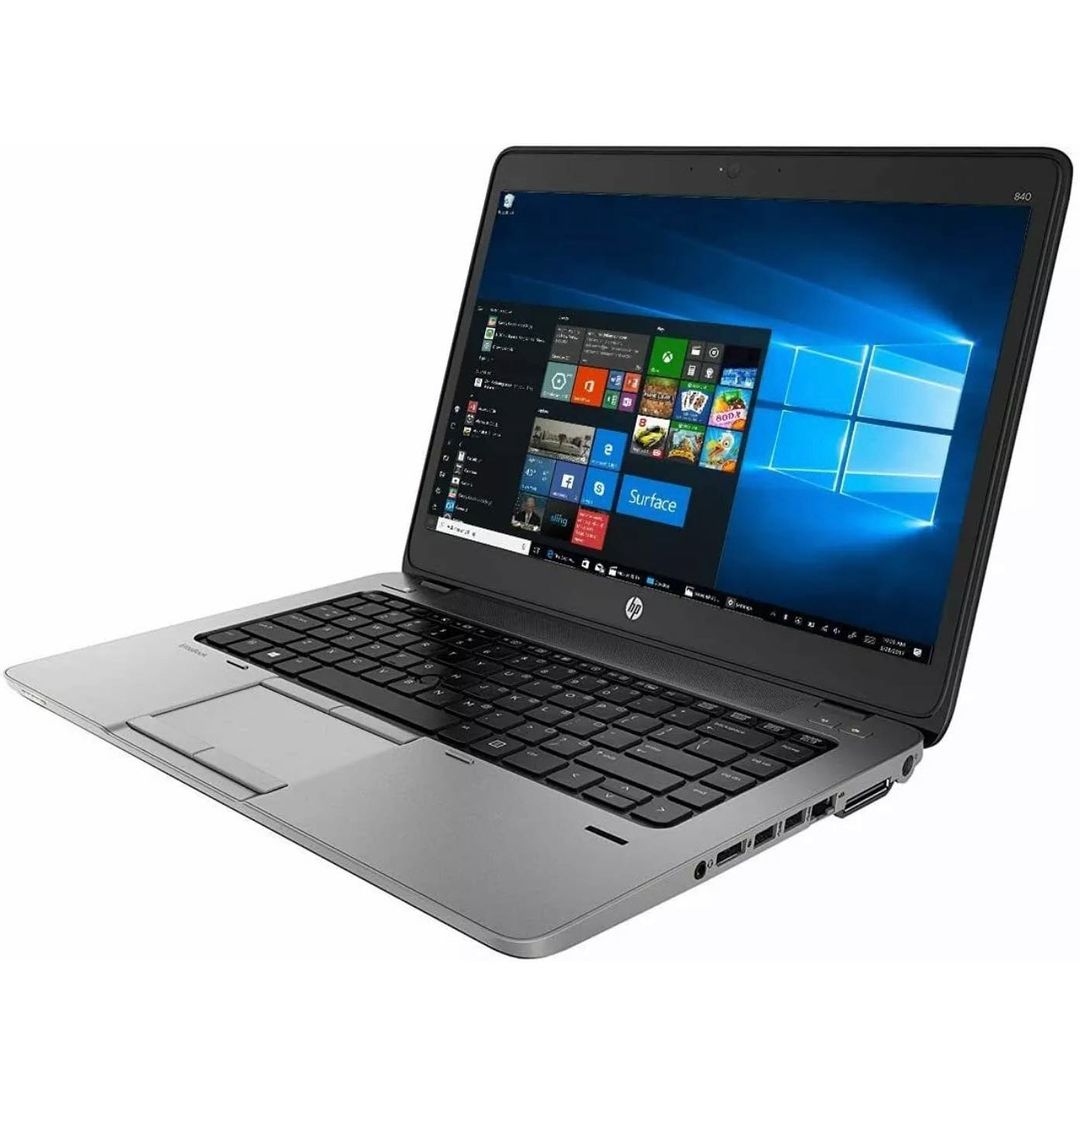 Hp Laptop 840 G1 Intel Core I5 Ram 4Gb Hdd 500Gb